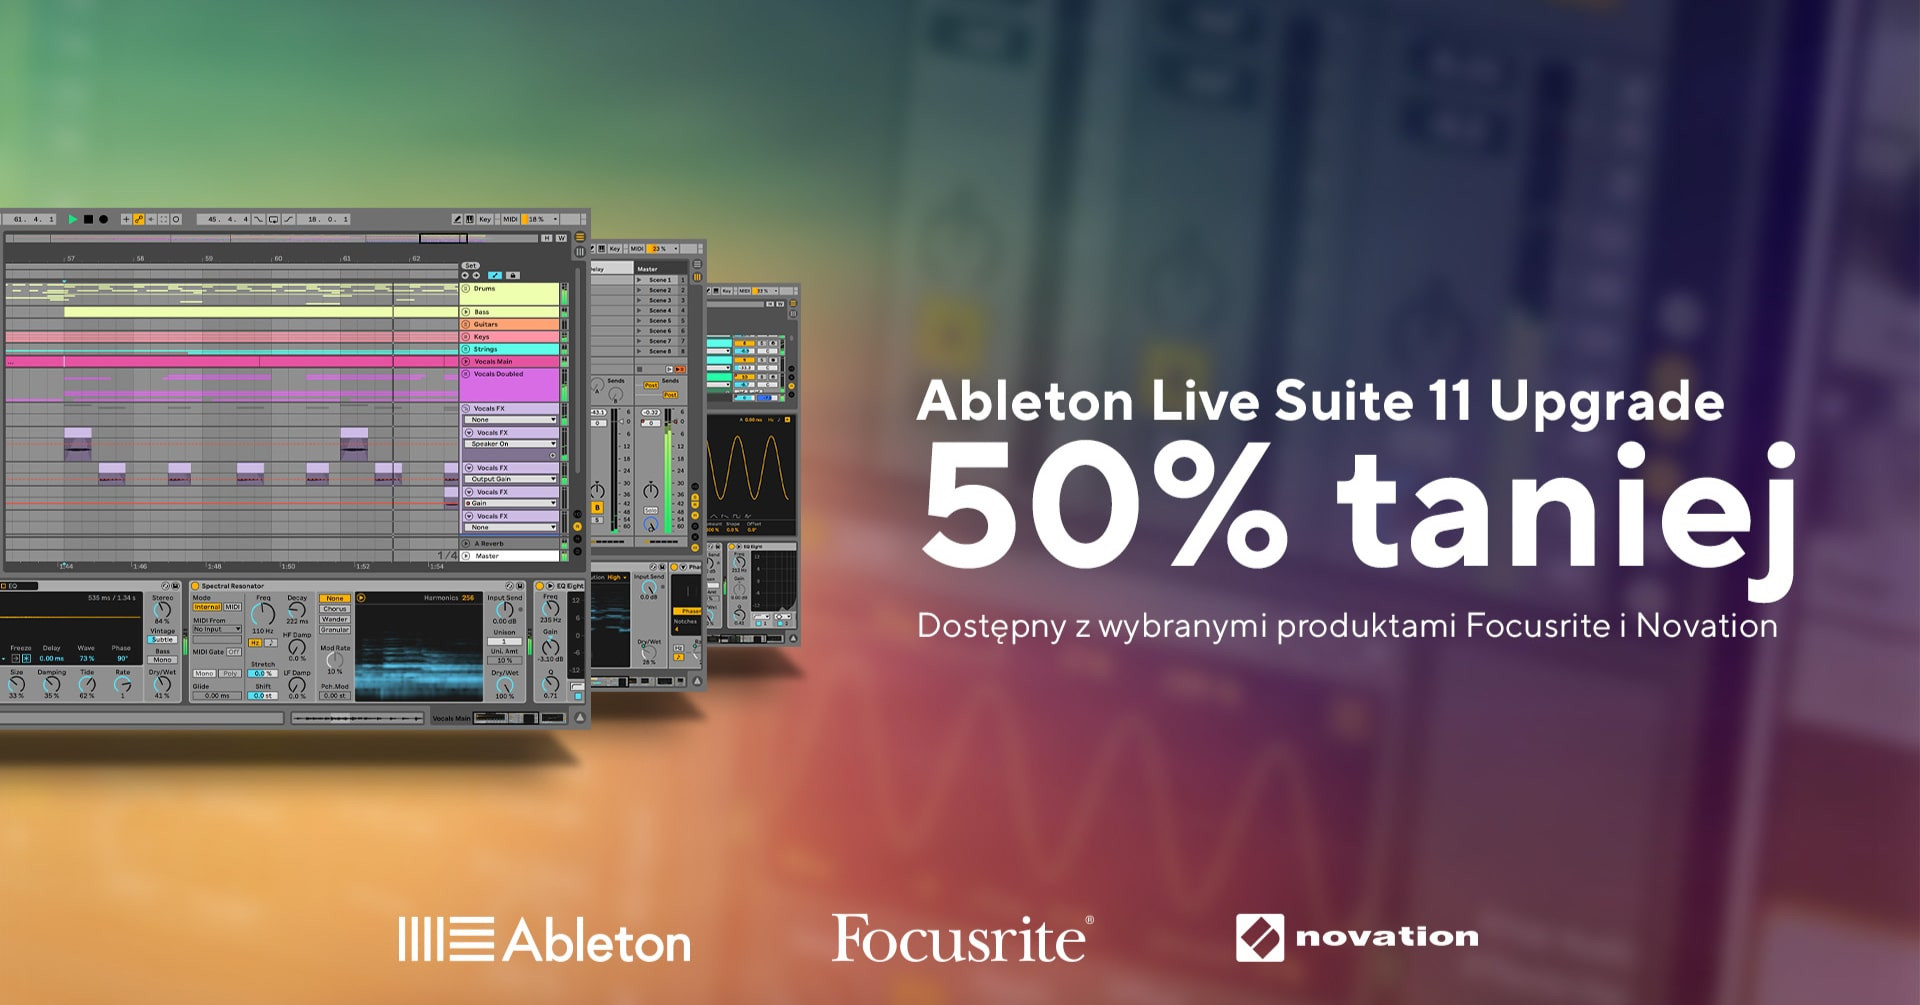 Kup produkty Focusrite lub Novation i odbierz 50% rabatu na Ableton Live Suite!